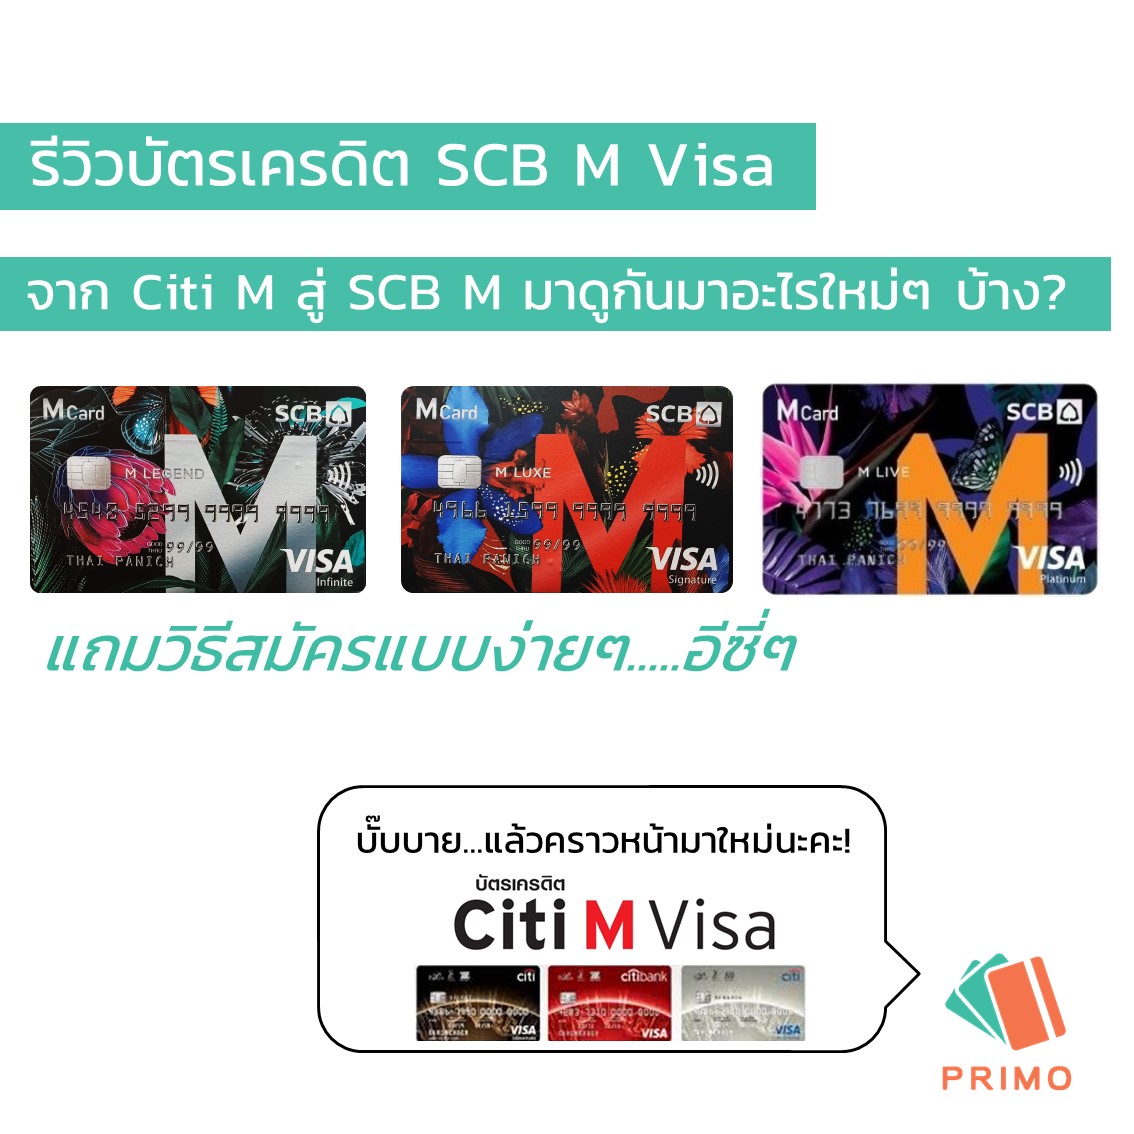 Cr ร ว วบ ตรเครด ต Scb M Visa โดยท มงาน Primo Pantip